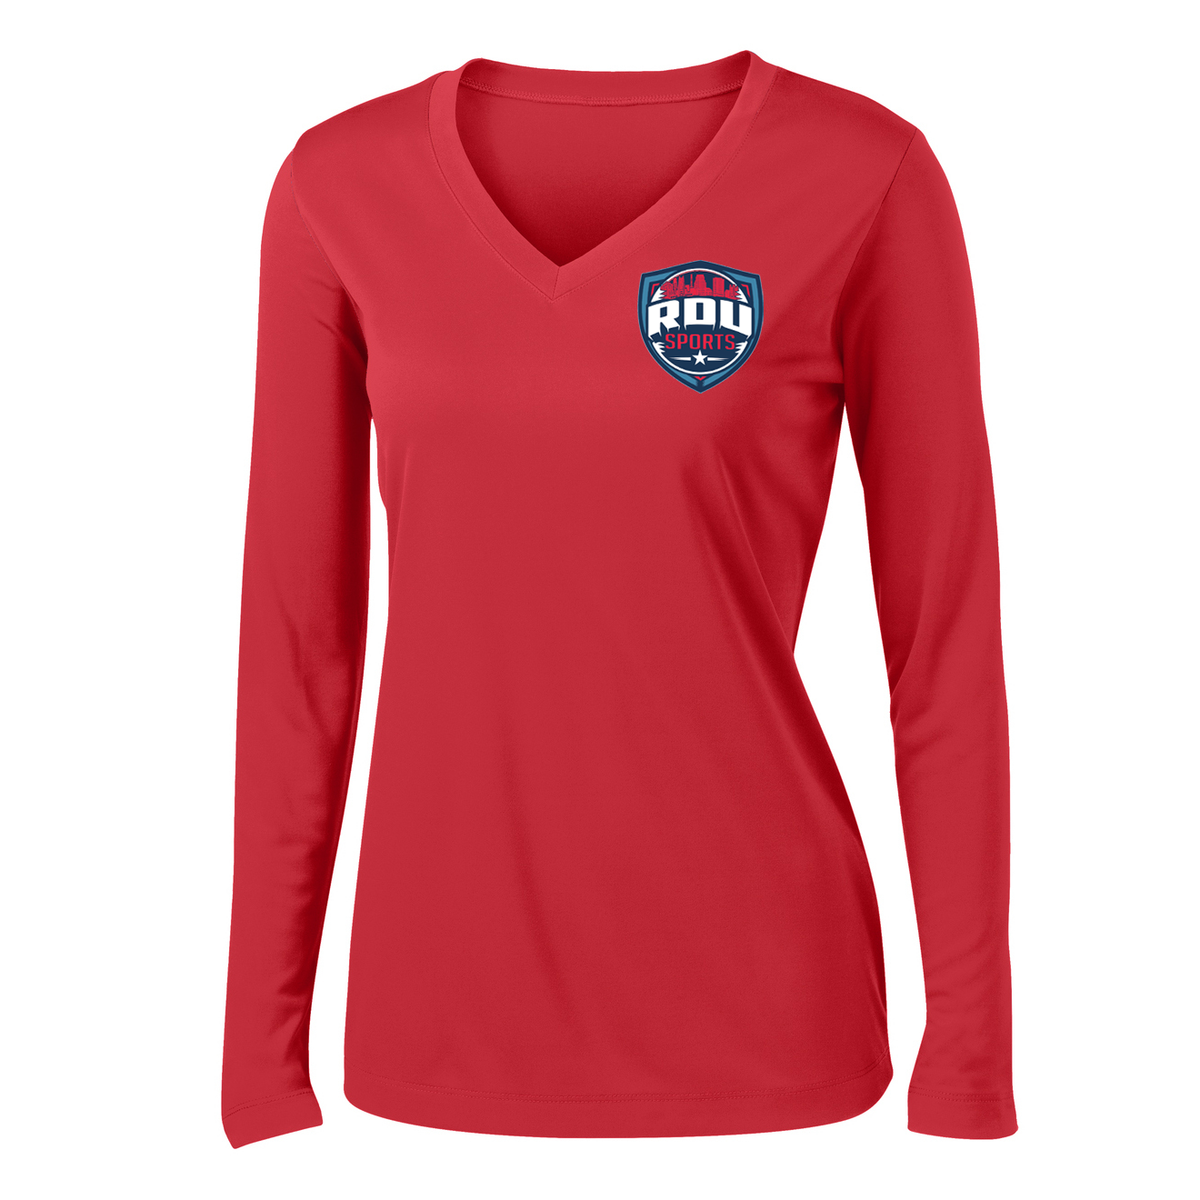 RDU Sports Women's Long Sleeve Performance Shirt